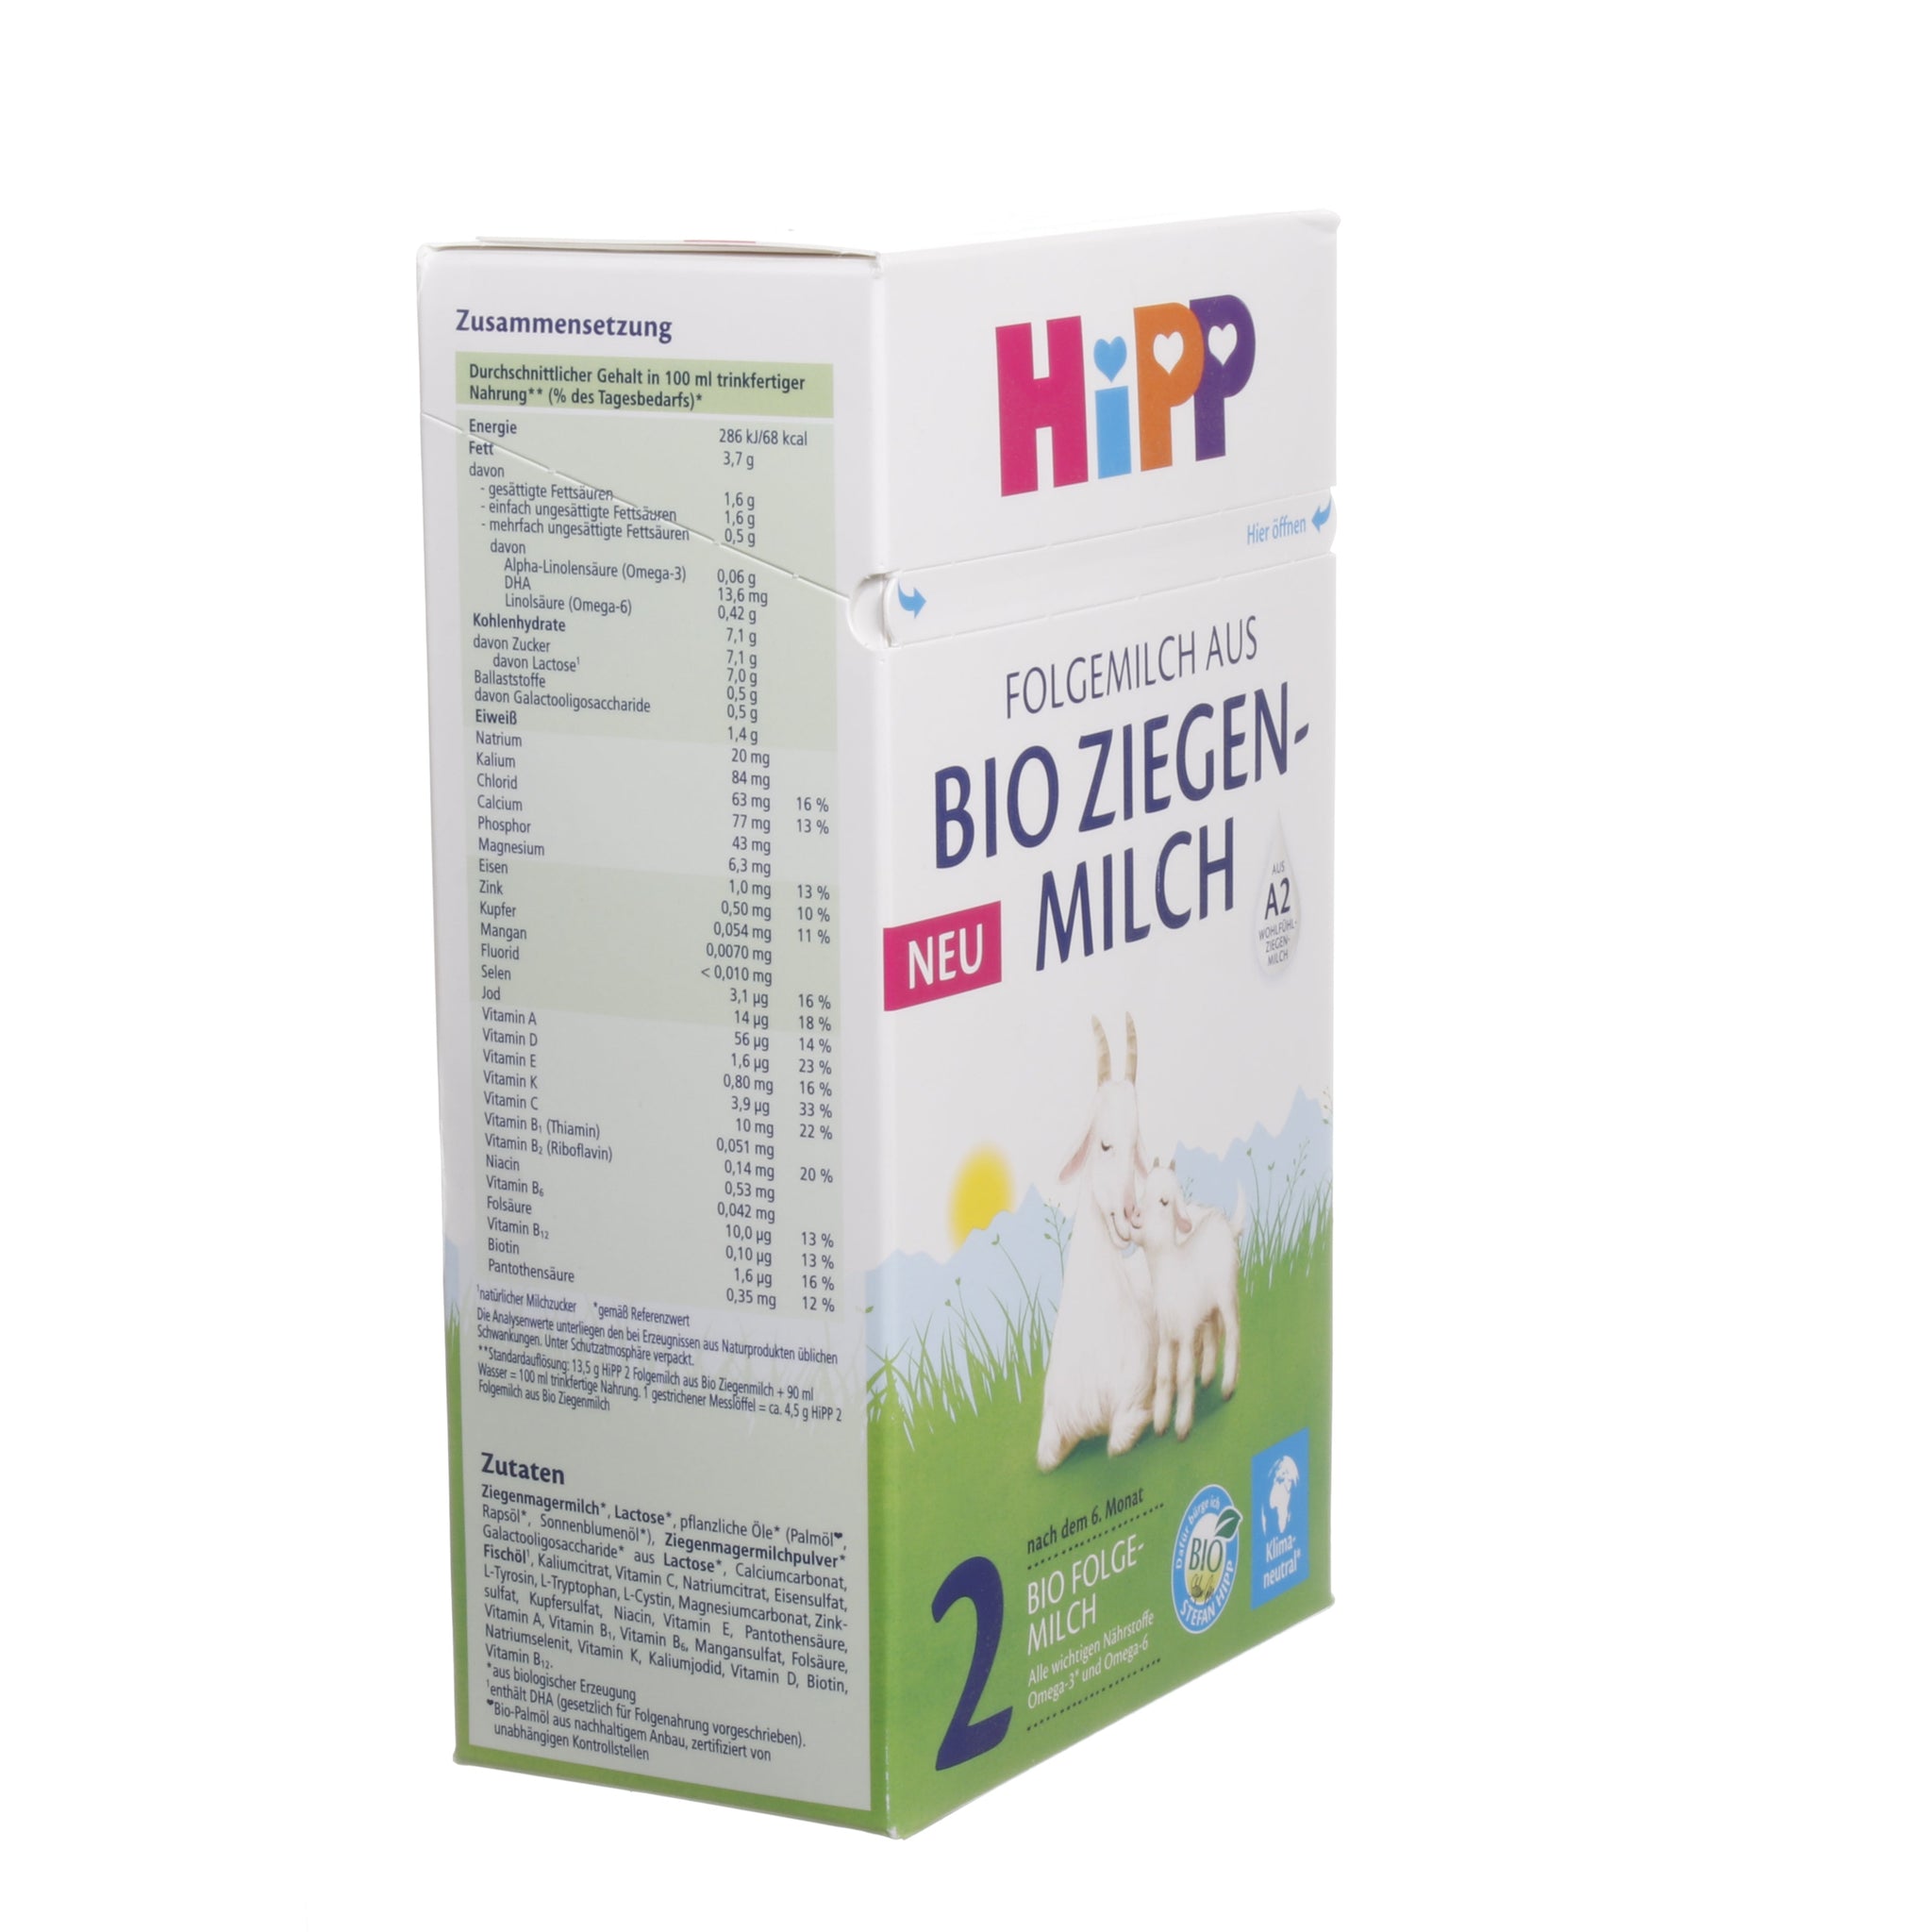 Hipp 2 Follow-on Milk Made from Organic Goat Milk, 400g - firstorganicbaby